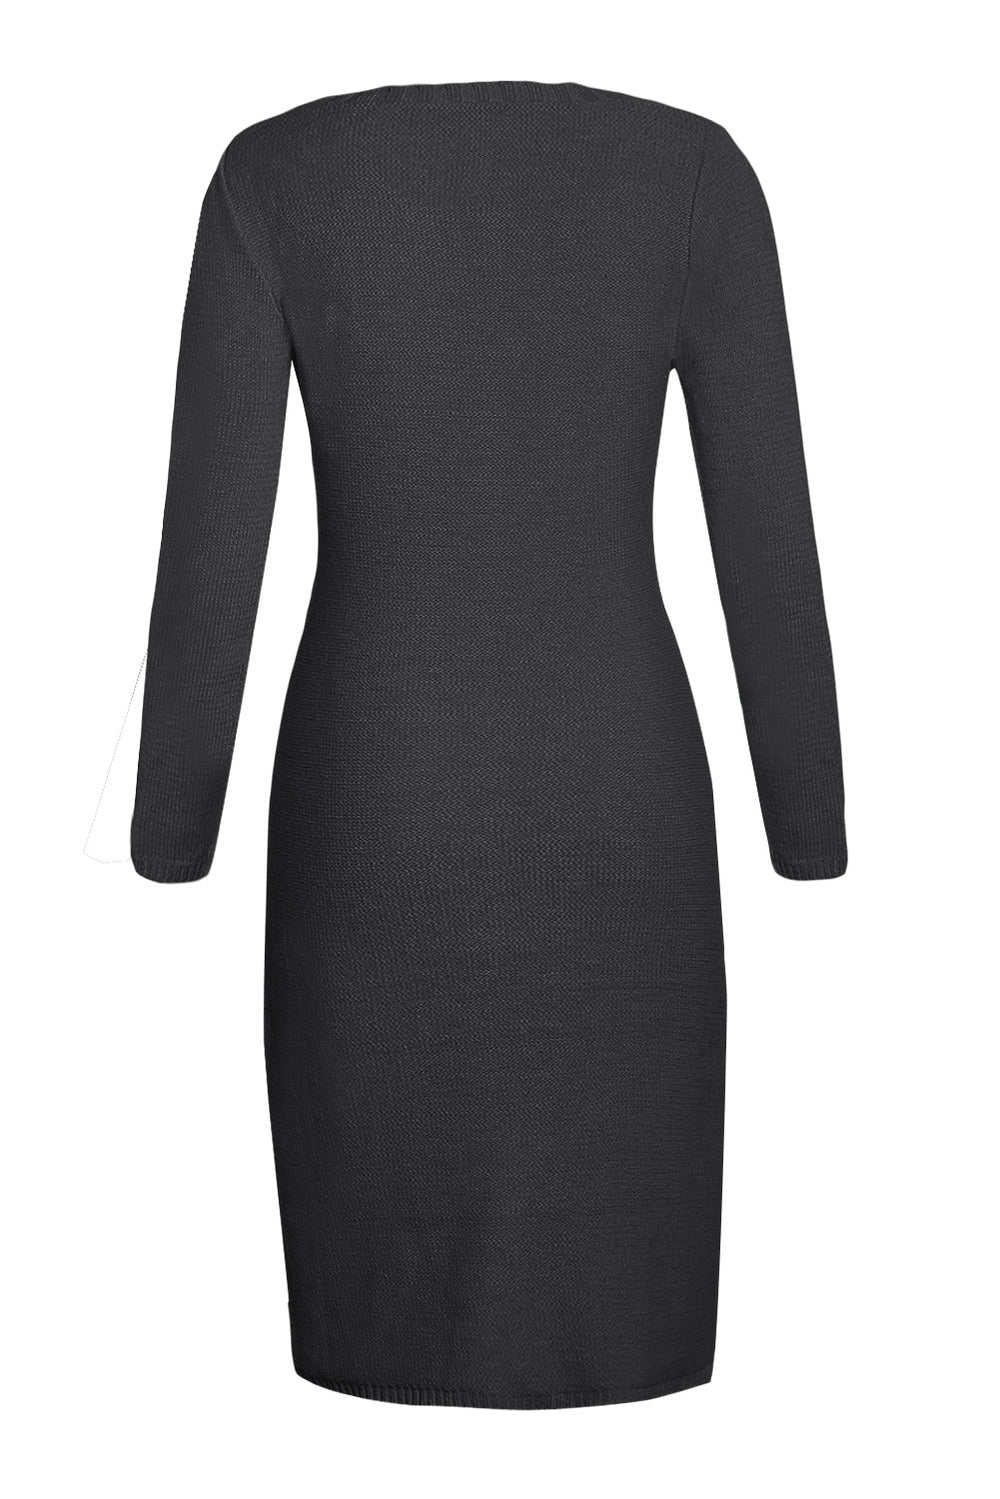 Women’s Black Hand Knitted Sweater Dress